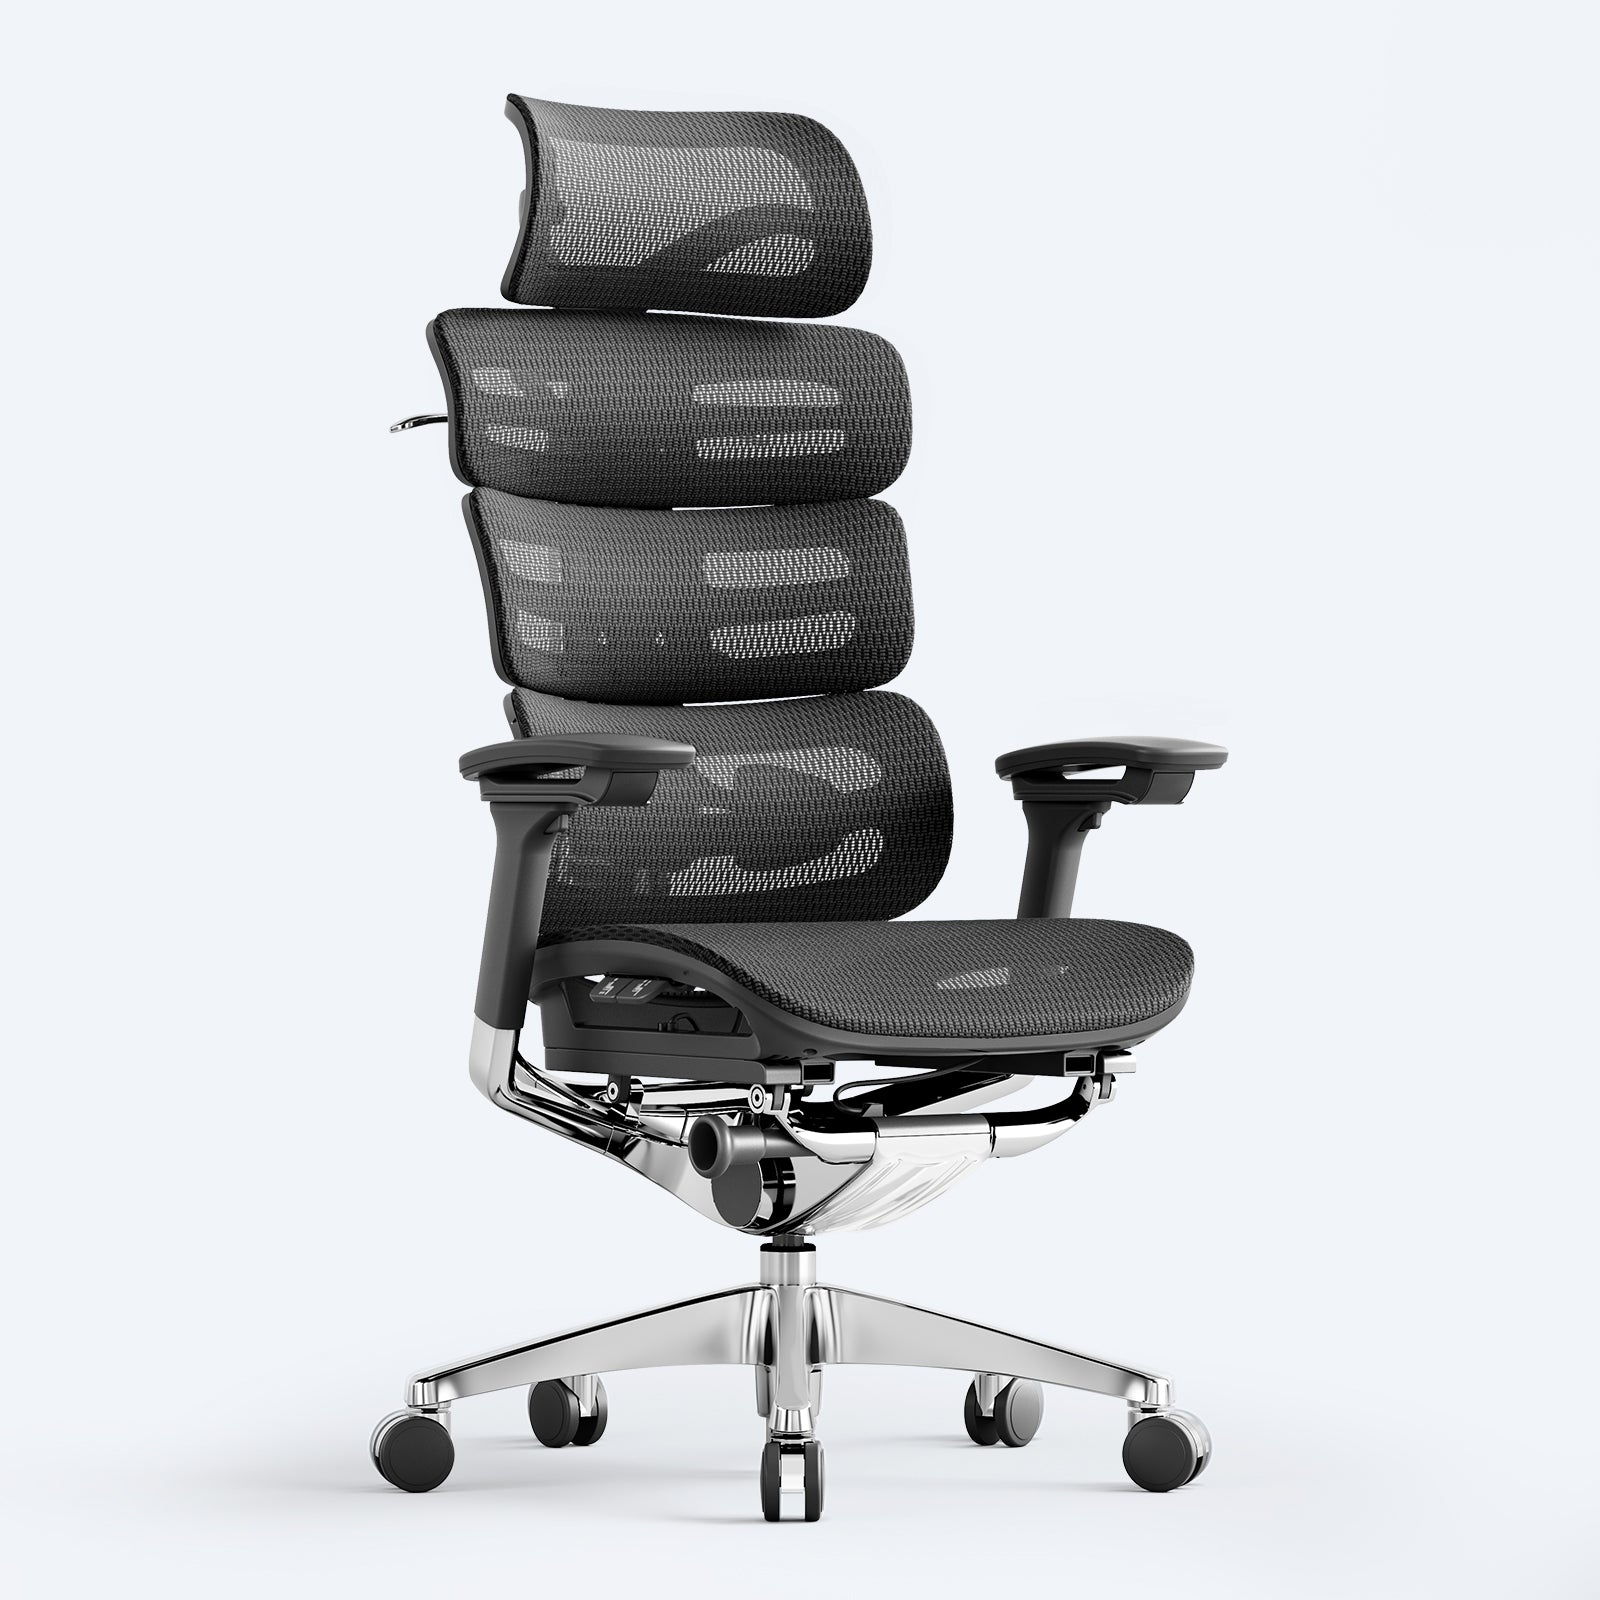 Product Details - Libero Specialist Ergonomic Chair